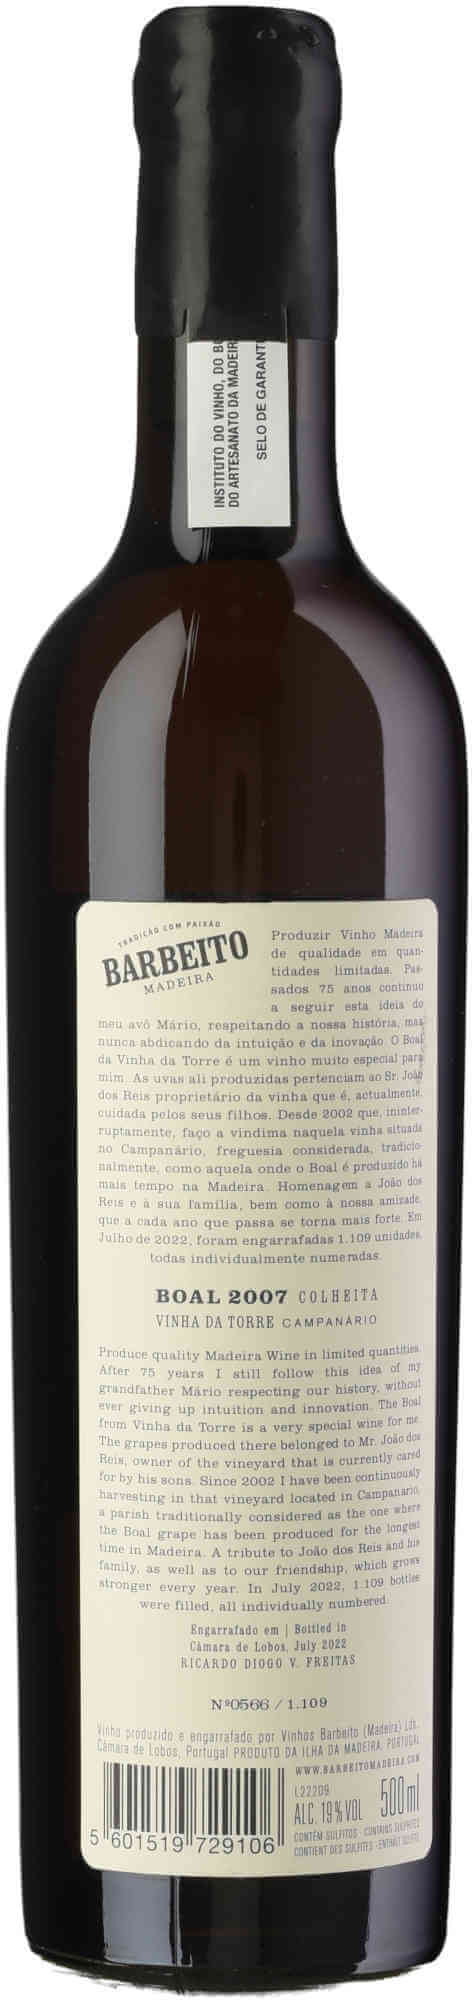 Barbeito-Boal-Colheita-2007-back